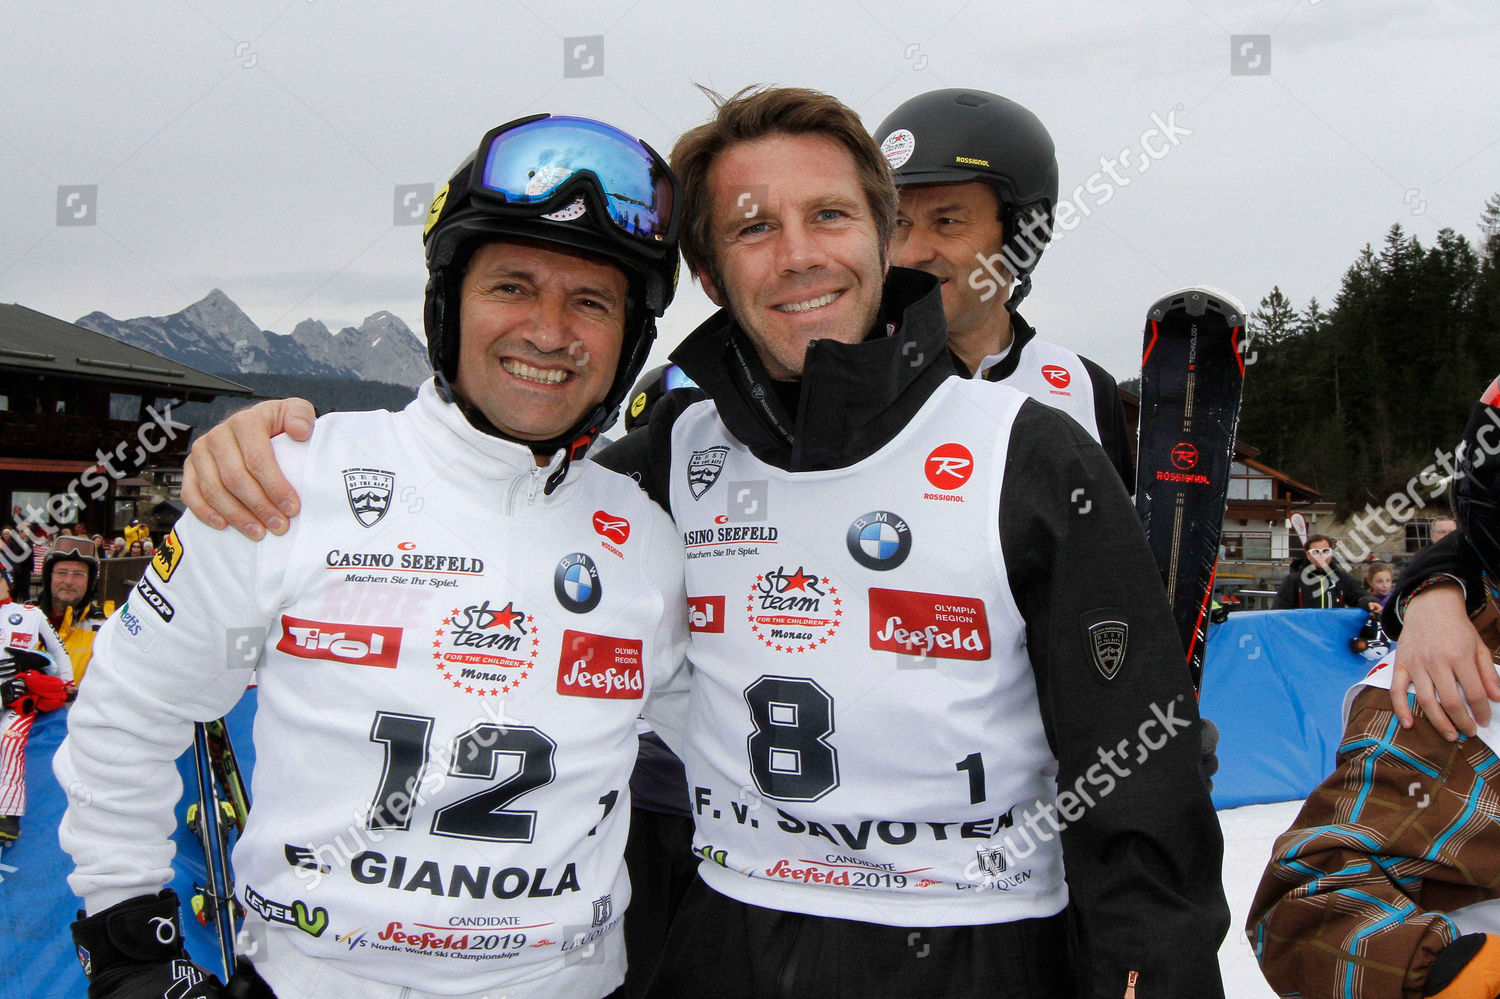 8th-world-star-ski-event-in-seefeld-austria-shutterstock-editorial-3668866n.jpg